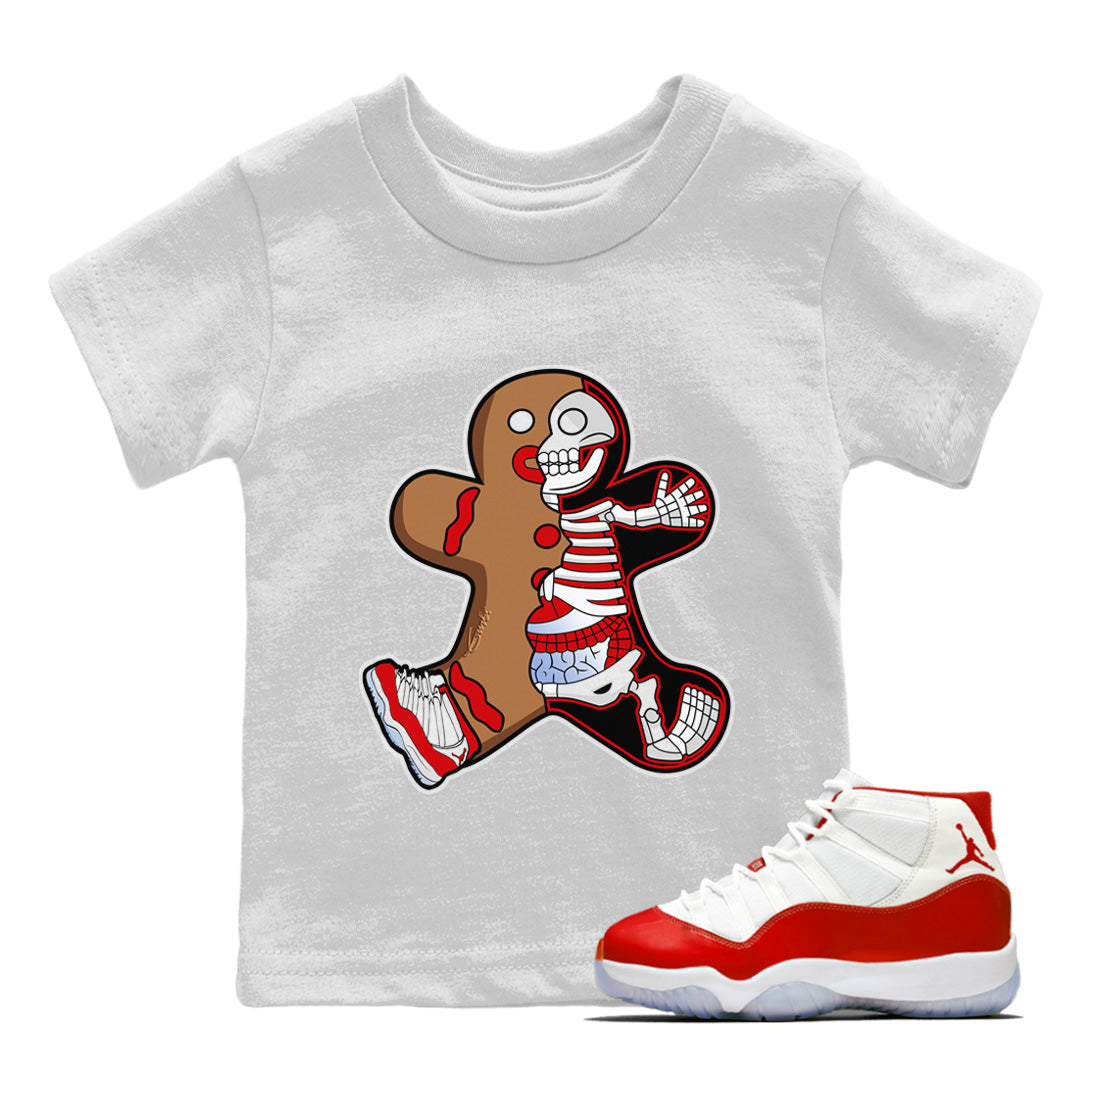 Jordan 11 Cherry Sneaker Match Tees Xray Gingerbread Man Sneaker Tees Jordan 11 Cherry Sneaker Release Tees Kids Shirts